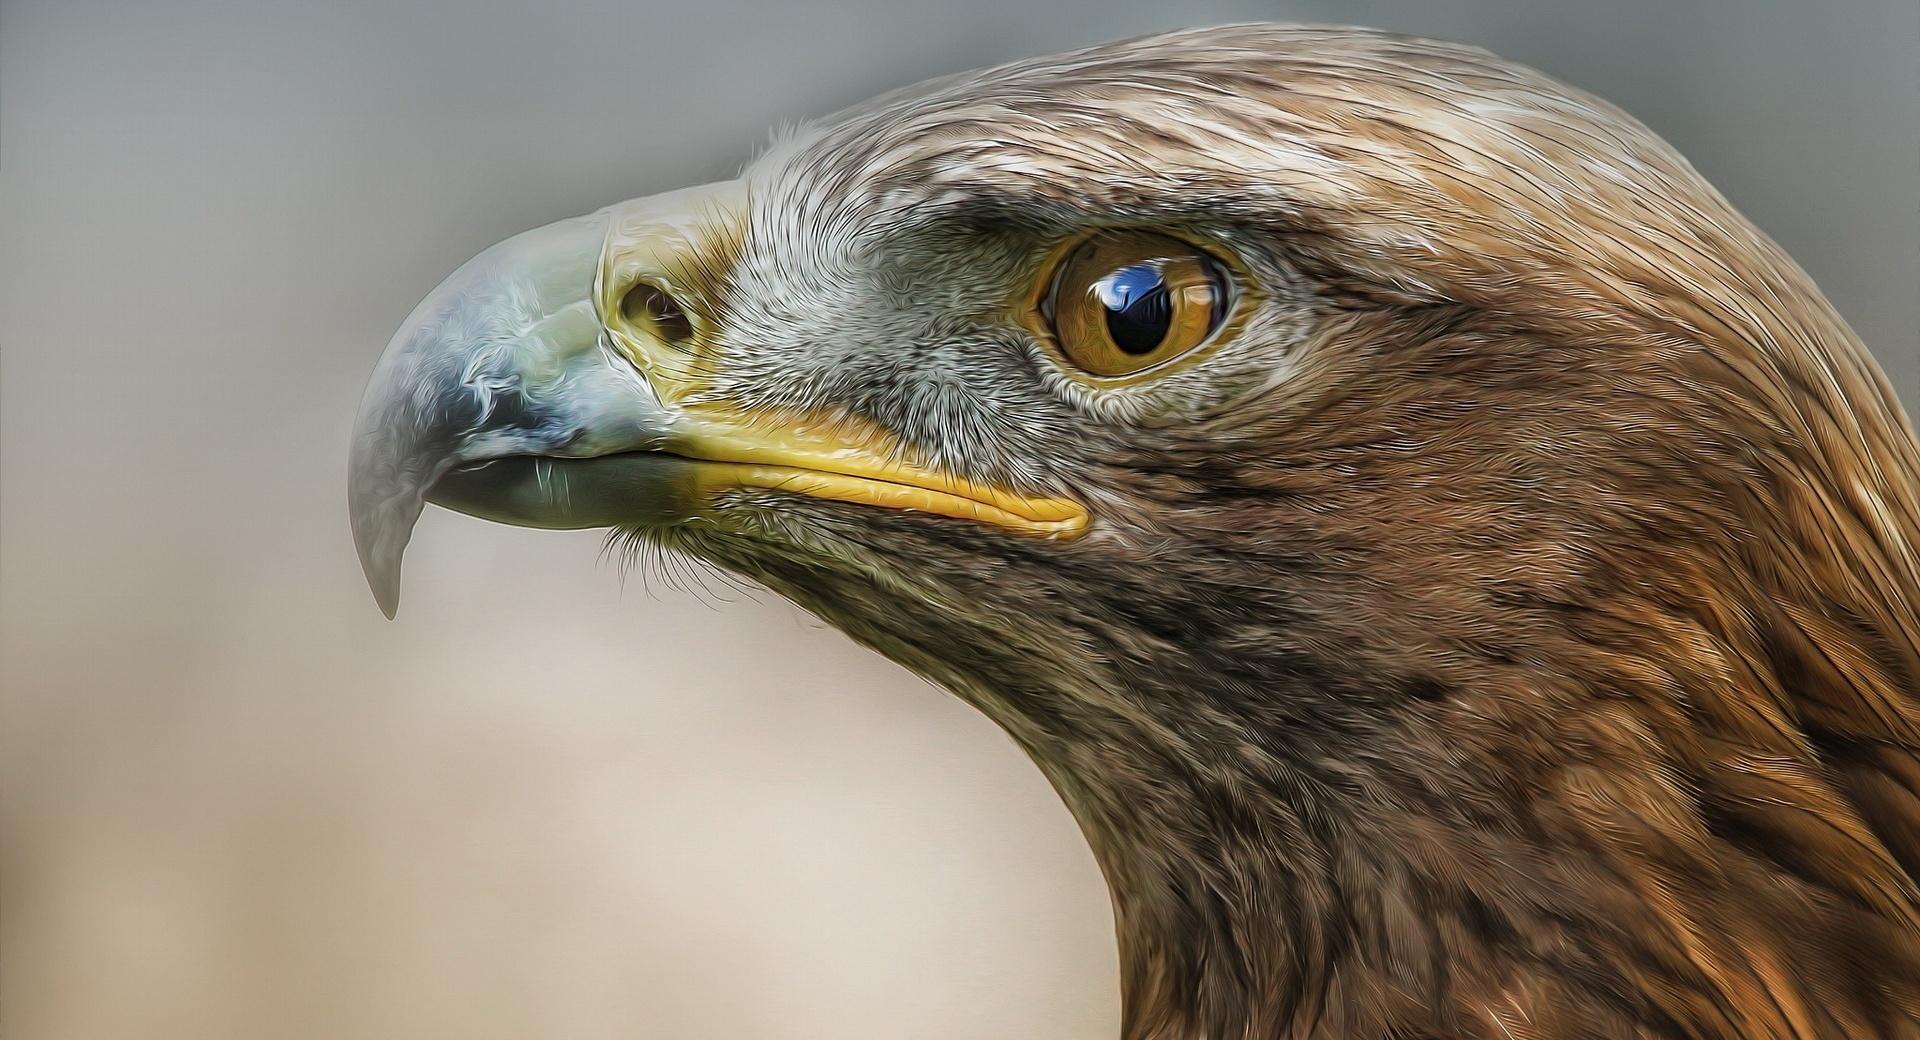 Eagle Macro Predator Bird at 1280 x 960 size wallpapers HD quality